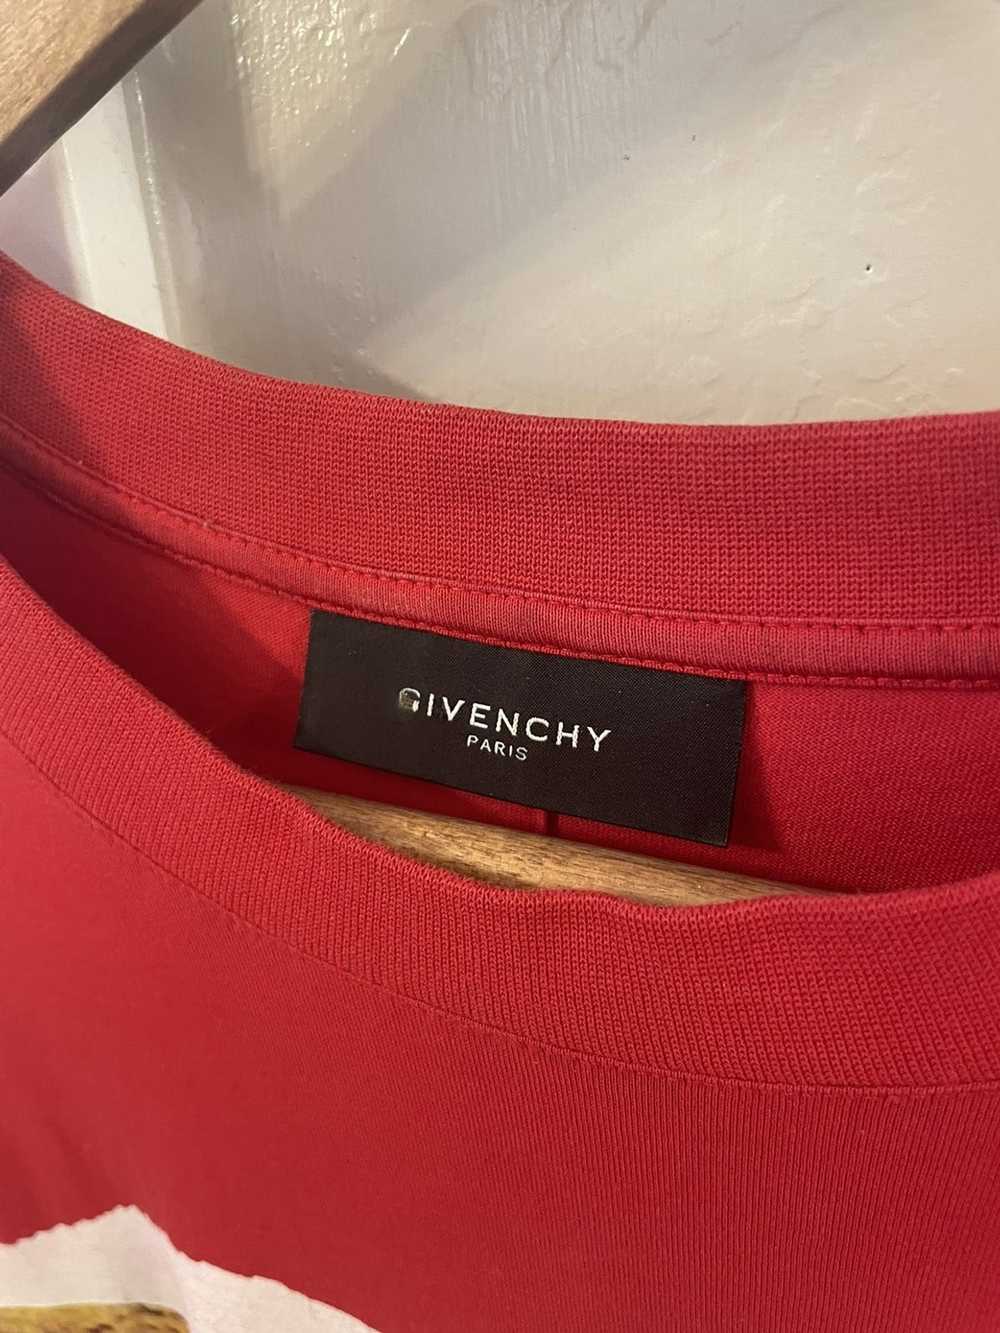 Givenchy Givenchy Centaur T Shirt - image 3